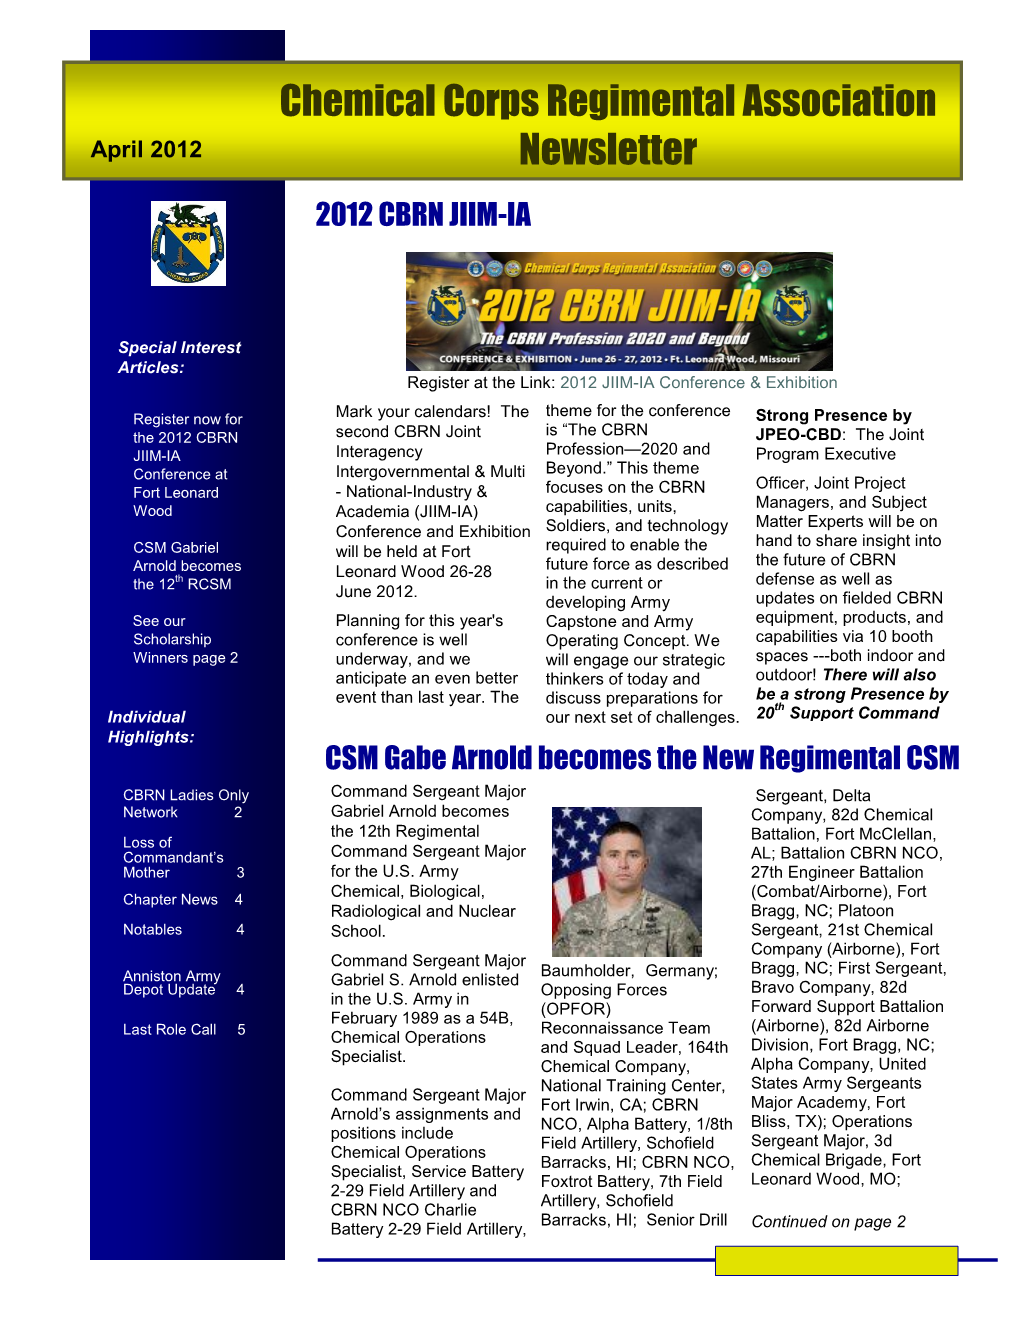 Chemical Corps Regimental Association Newsletter